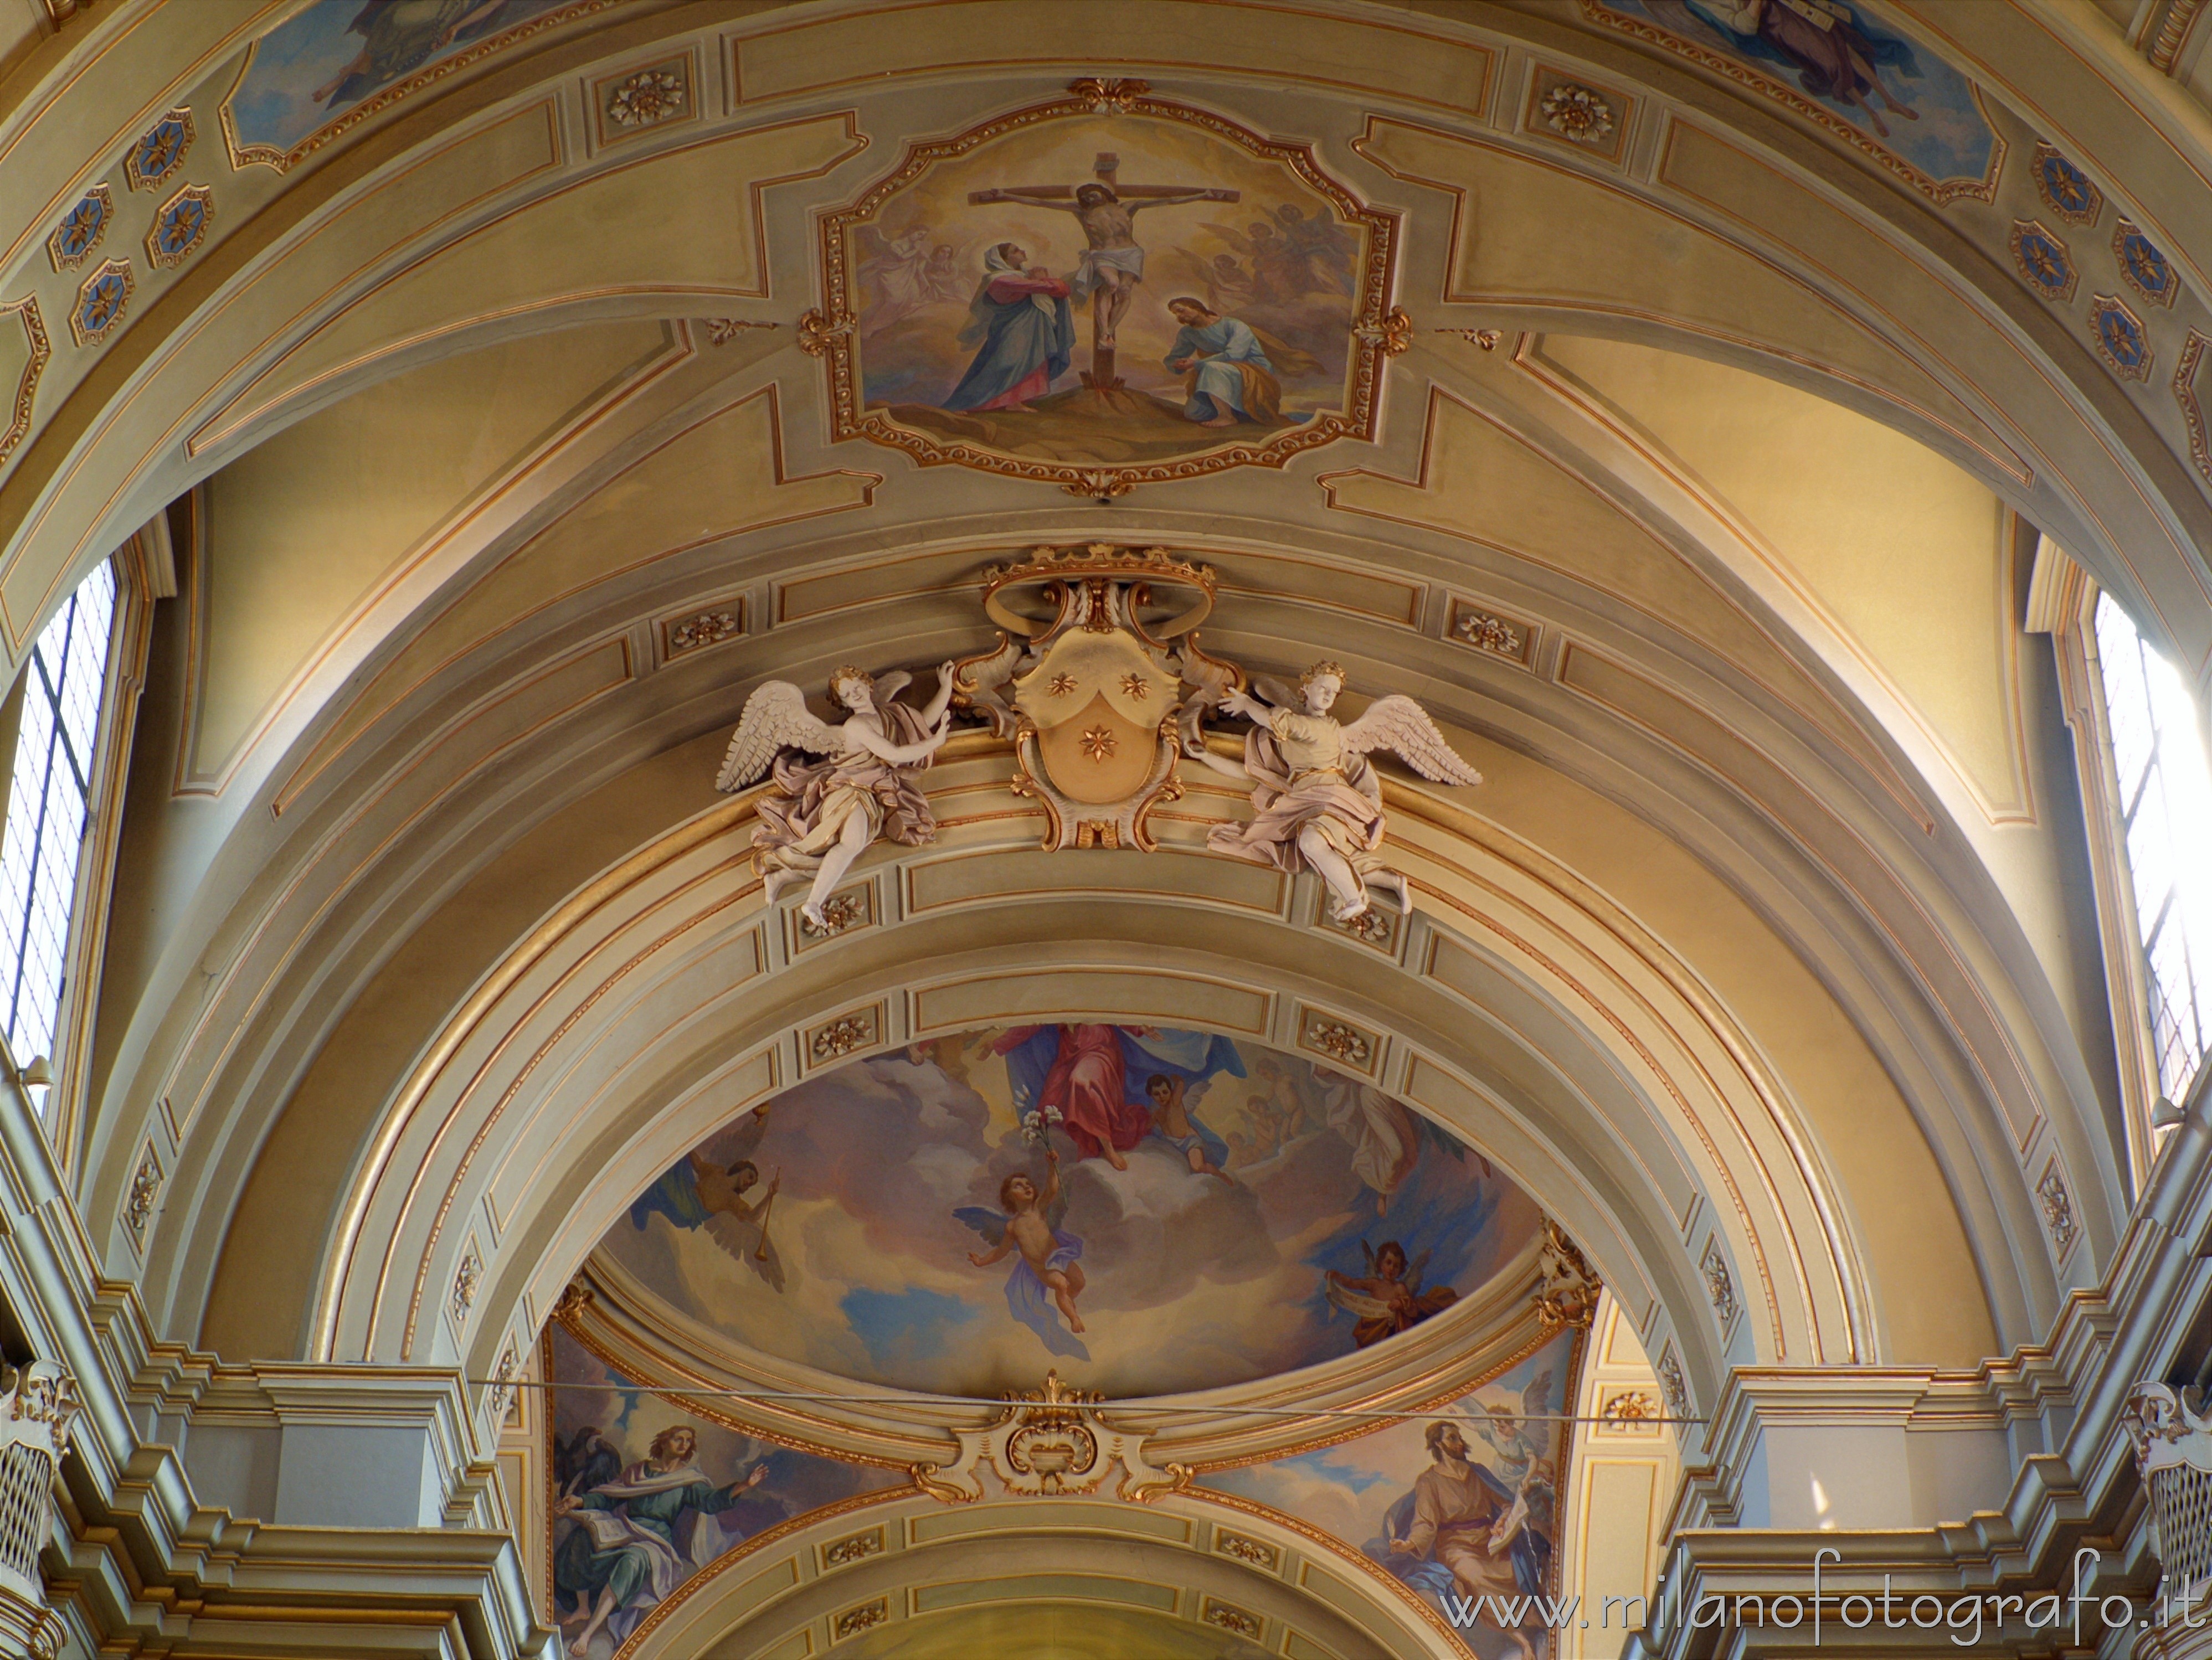 Rimini (Italy): Great arch of the Church of San Giovanni Battista - Rimini (Italy)